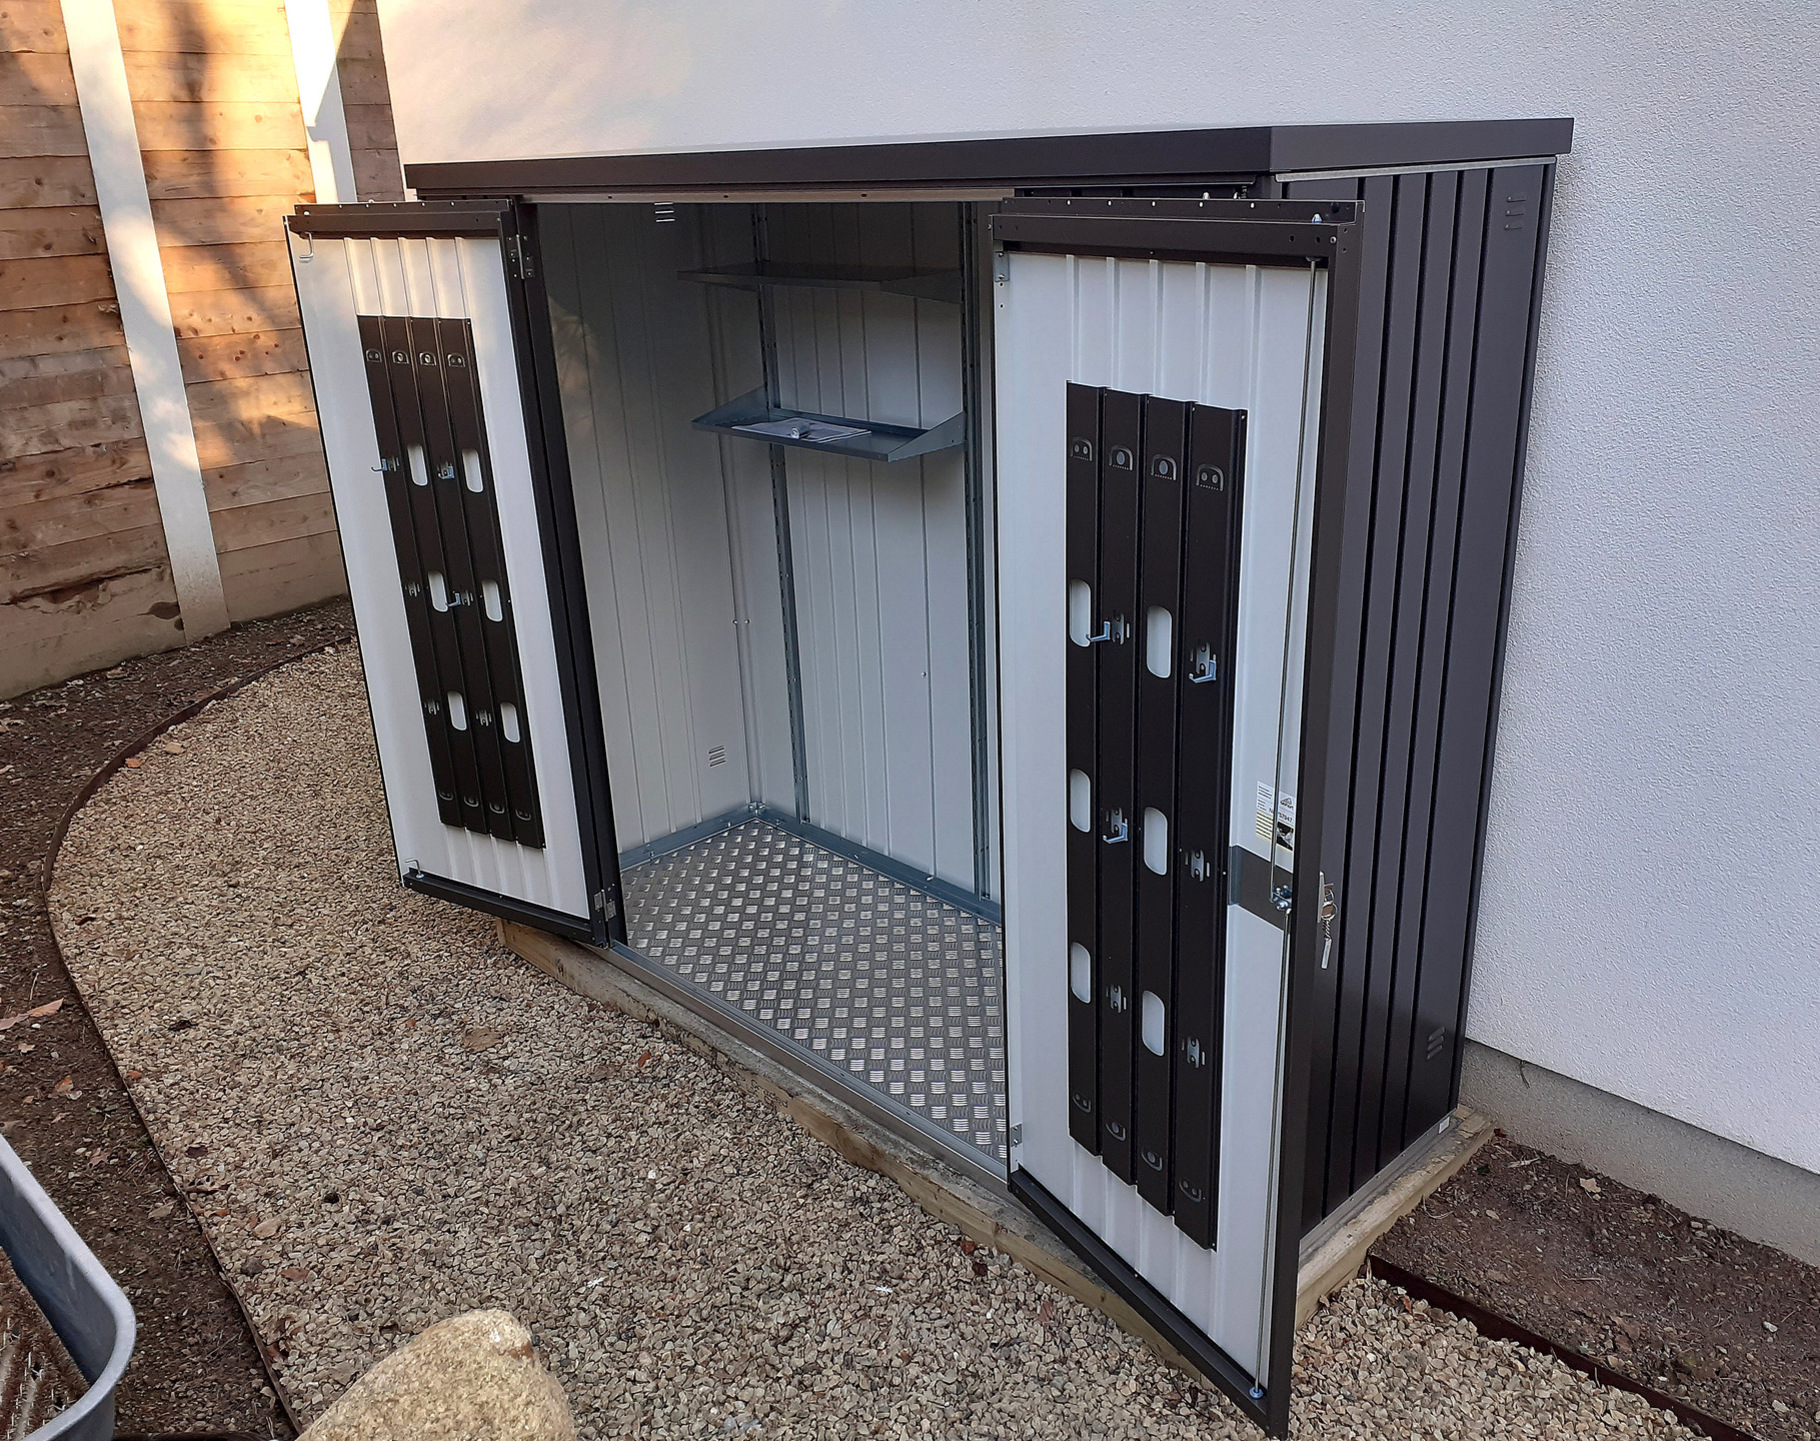 Biohort Equipment Locker 230 in metallic dark grey, supplied + fitted in Enniskerry, Co Wicklow | Stylish, Versatile, Secure & Rainproof Compact Garden Storage Solution